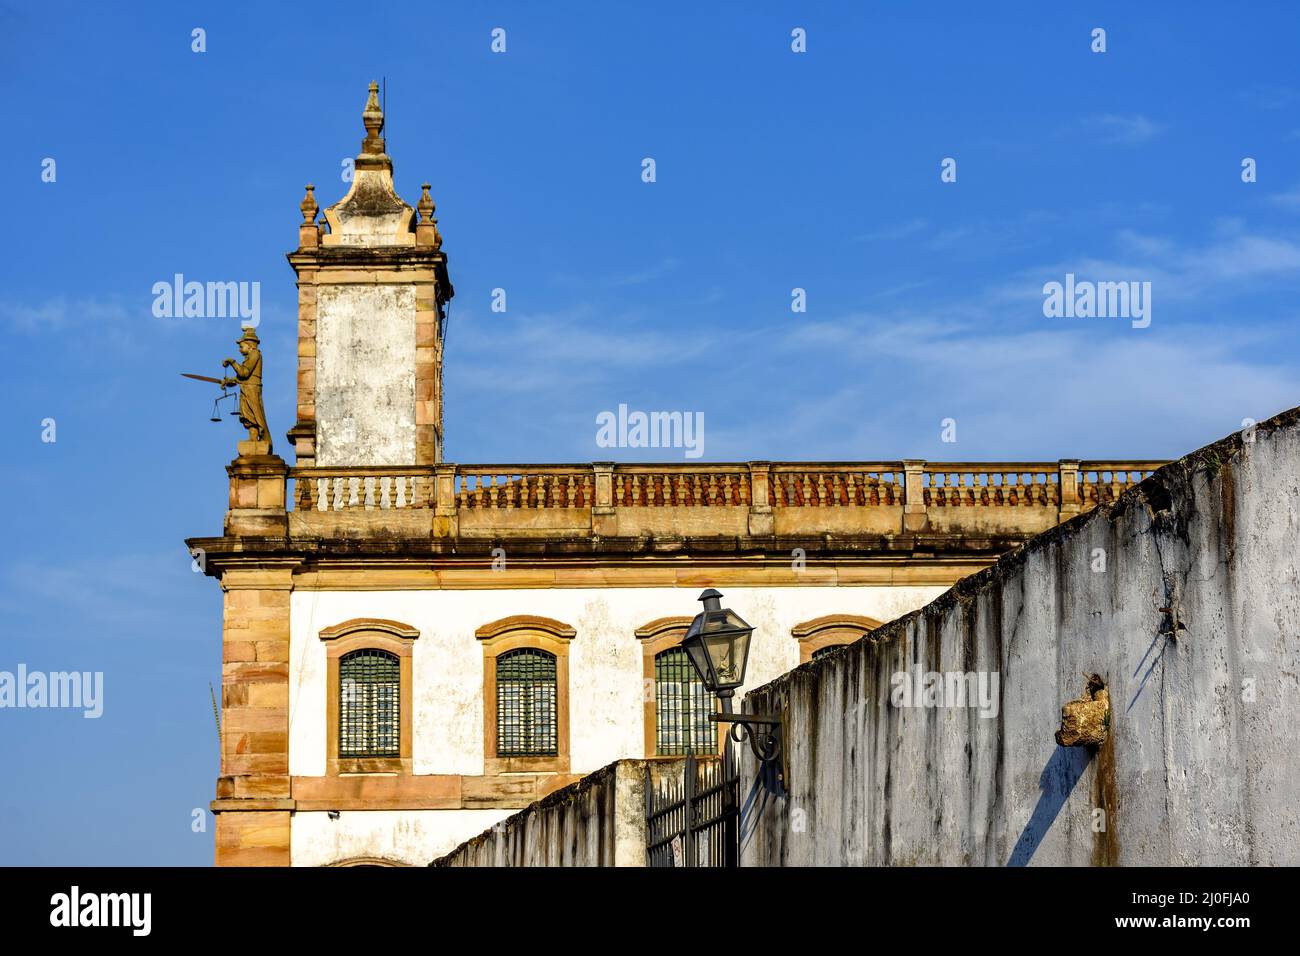 Arquitectura colonial brasileña barroca del siglo 18th Foto de stock